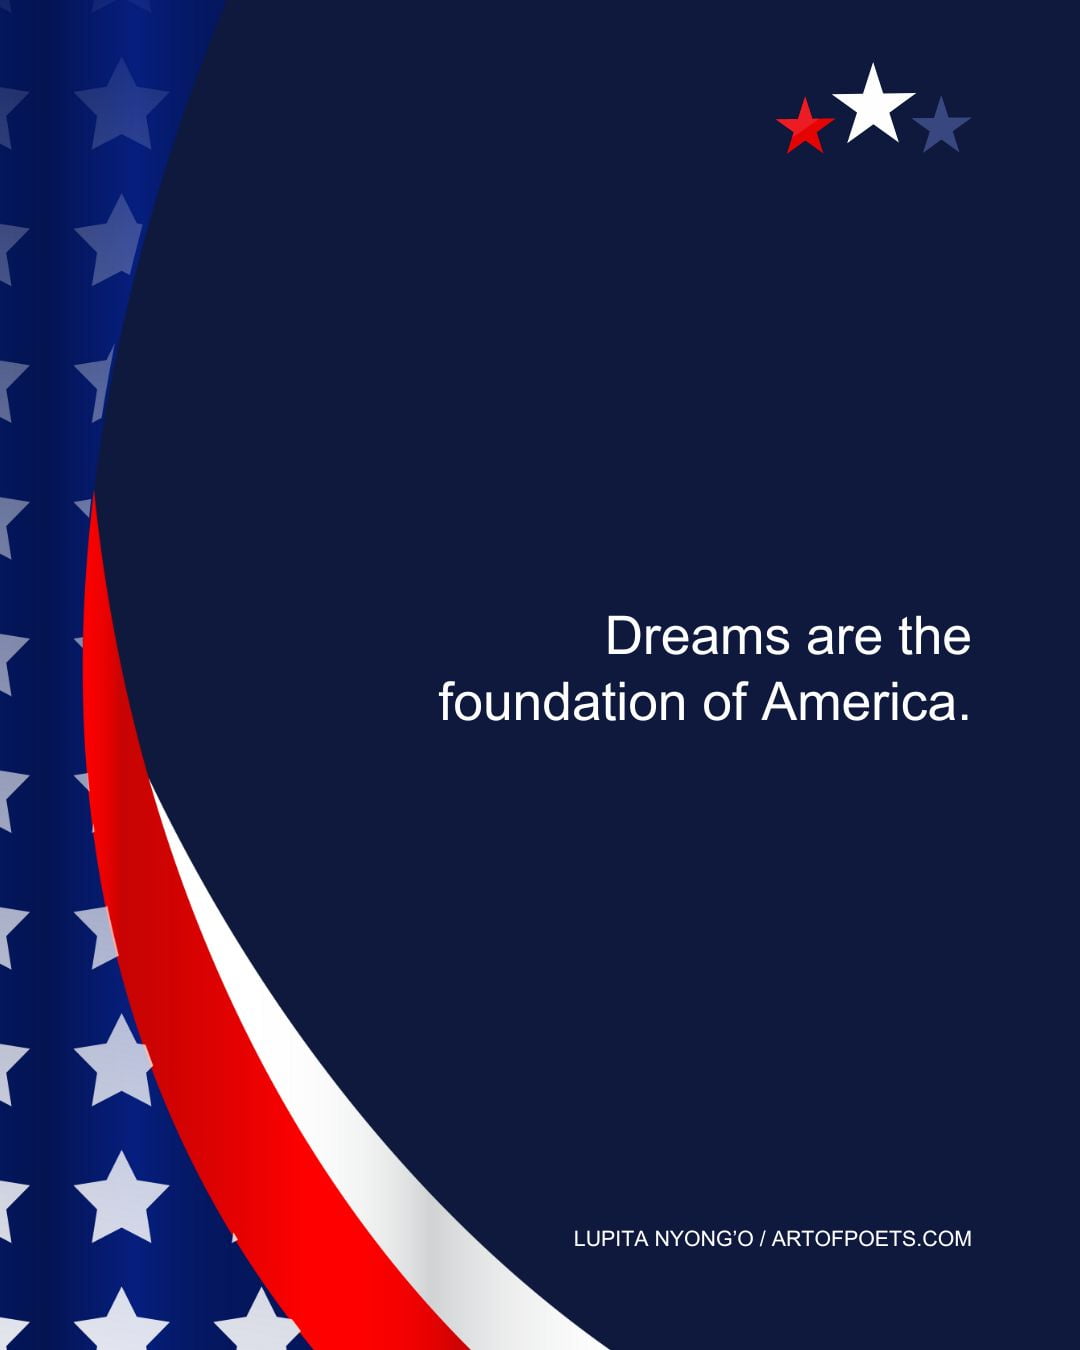 Dreams are the foundation of America